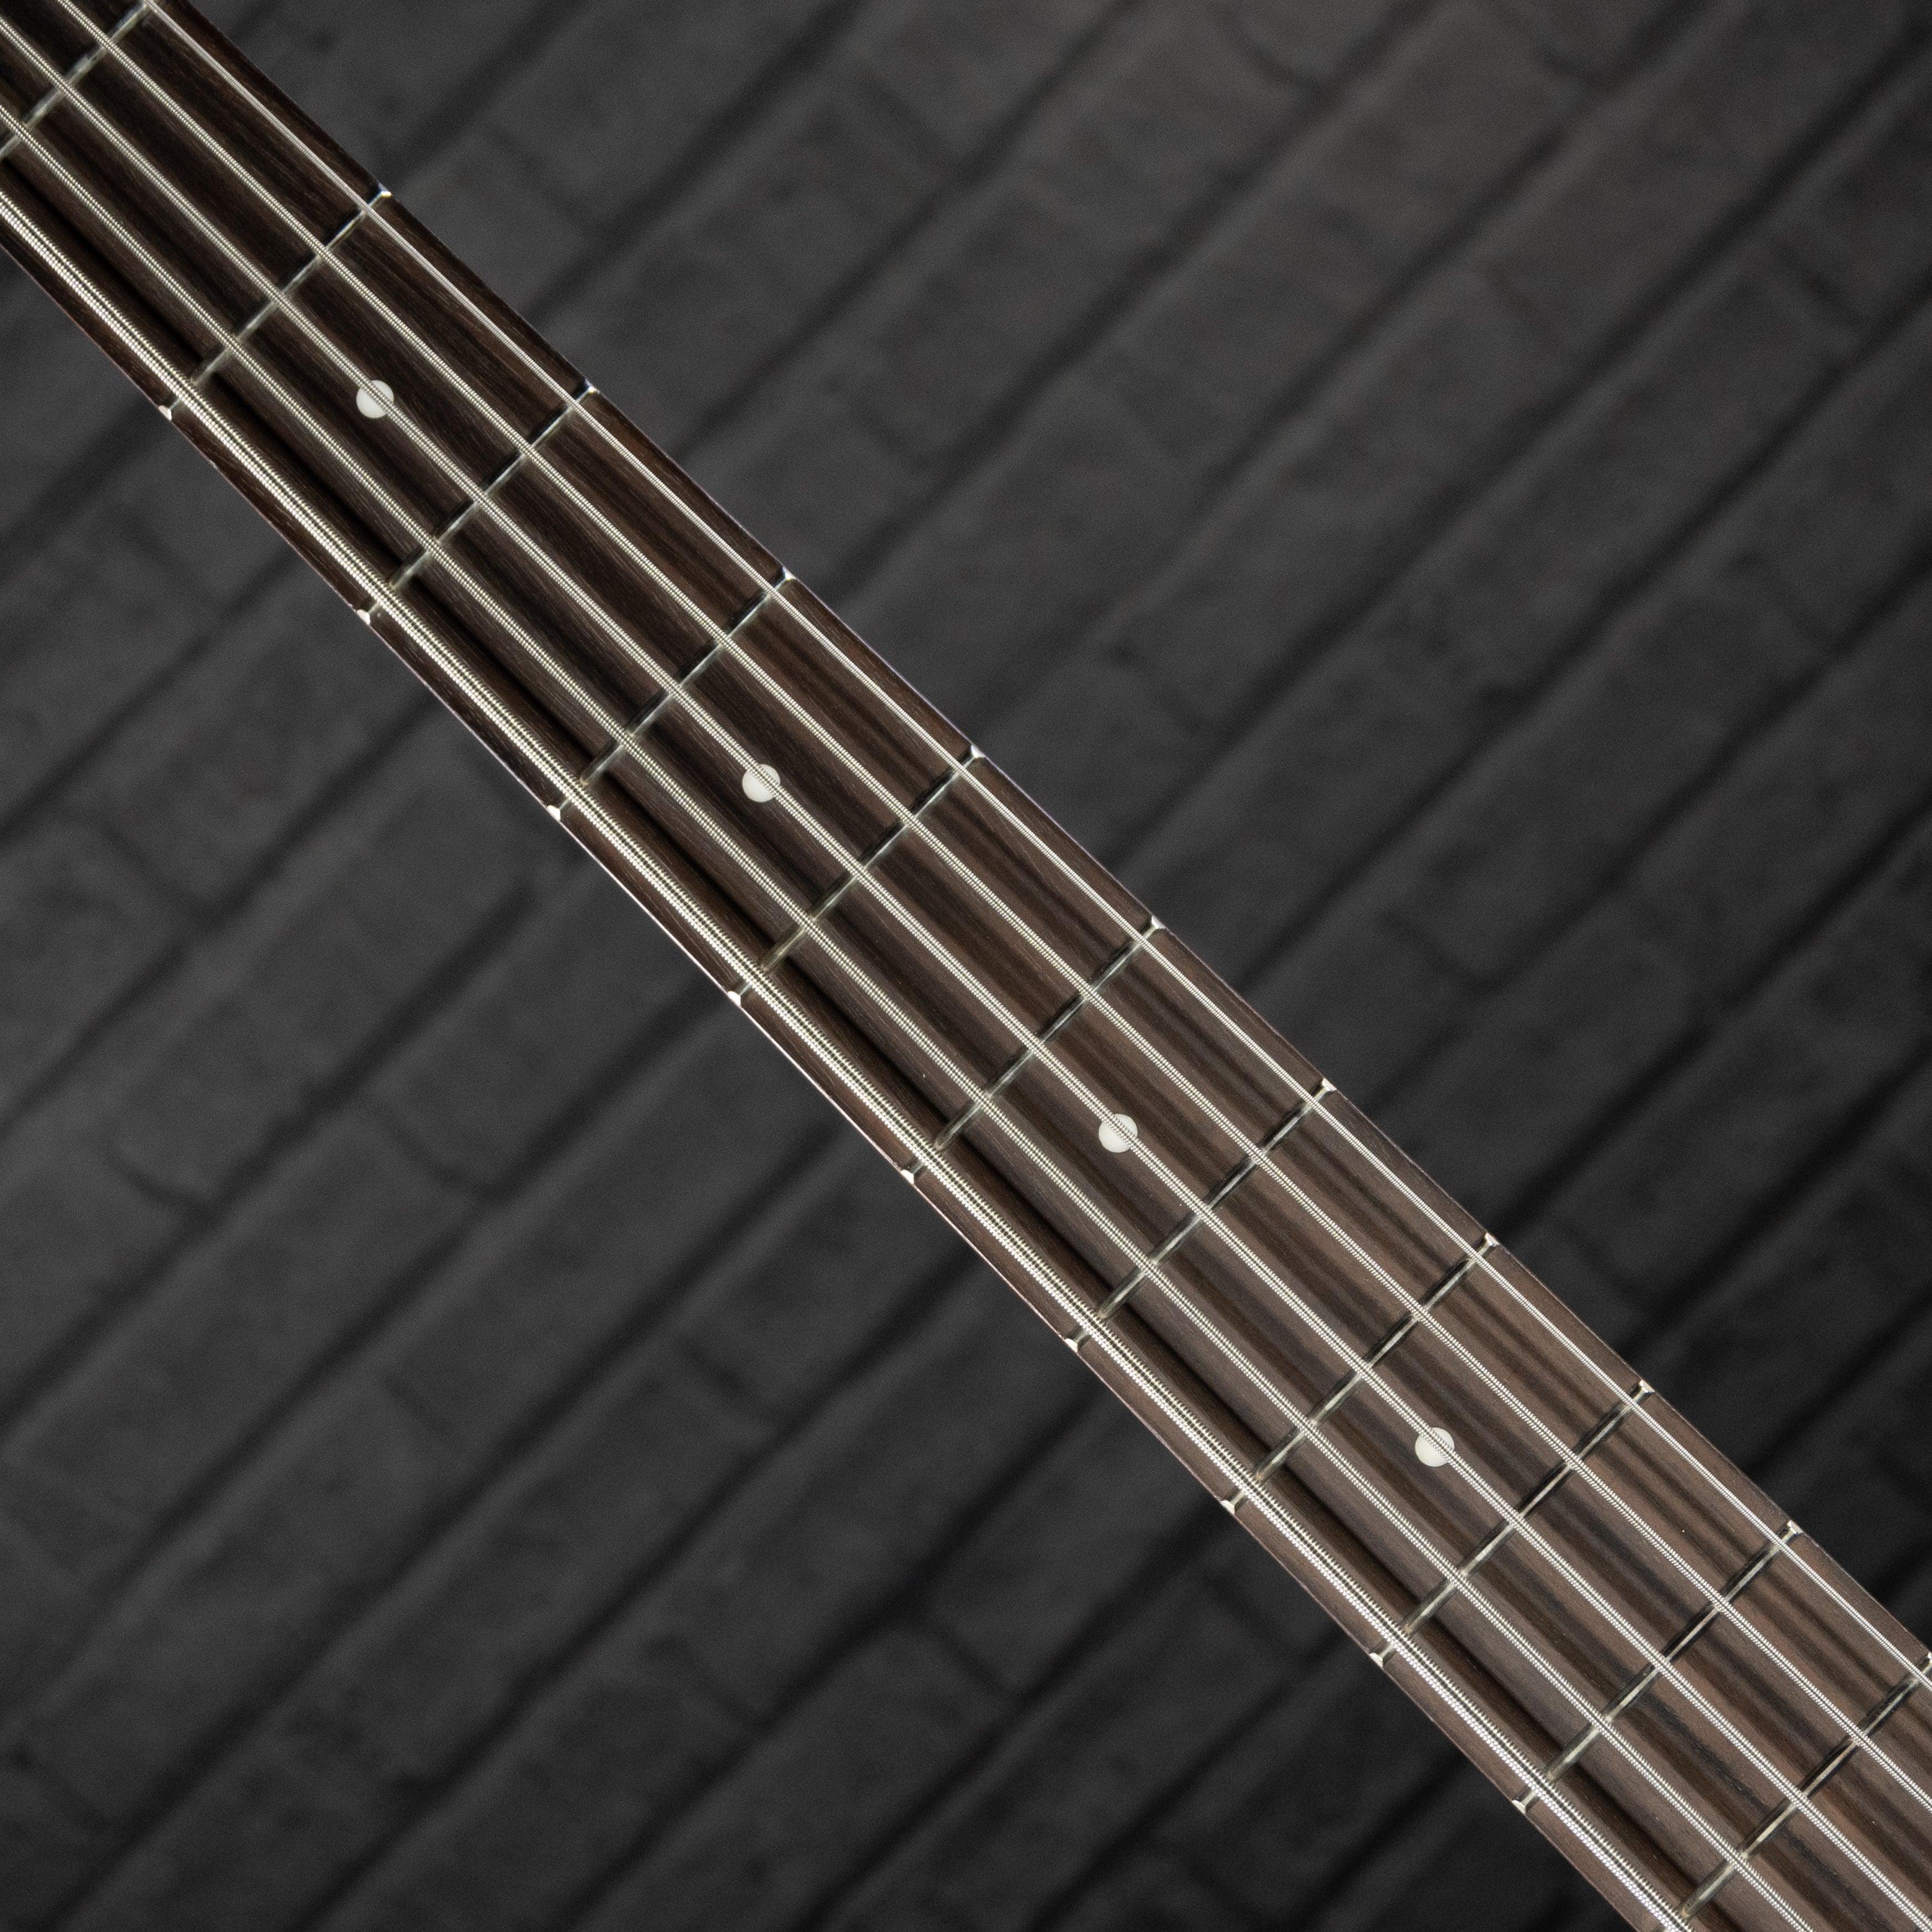 Spector Legend 5 Standard 5 String Bass Guitar (Tobacco Sunburst)